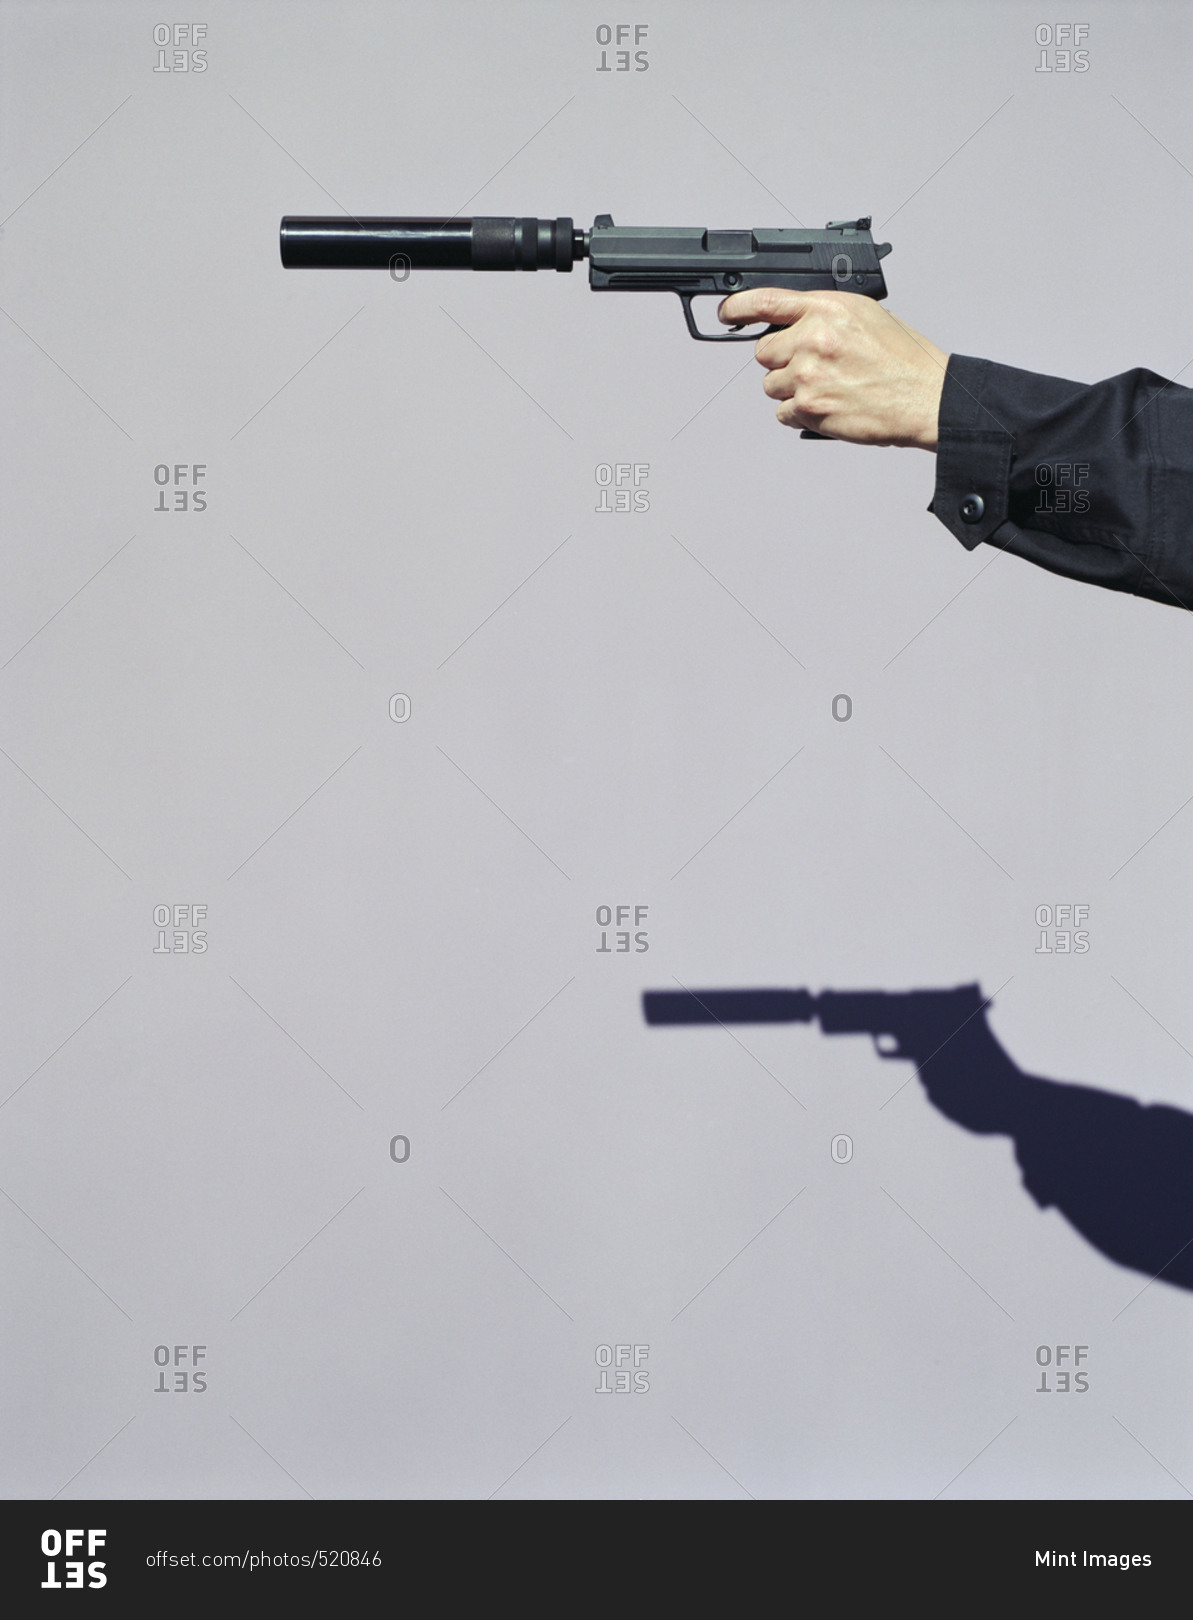 Detail of man aiming high powered hand gun with silencer